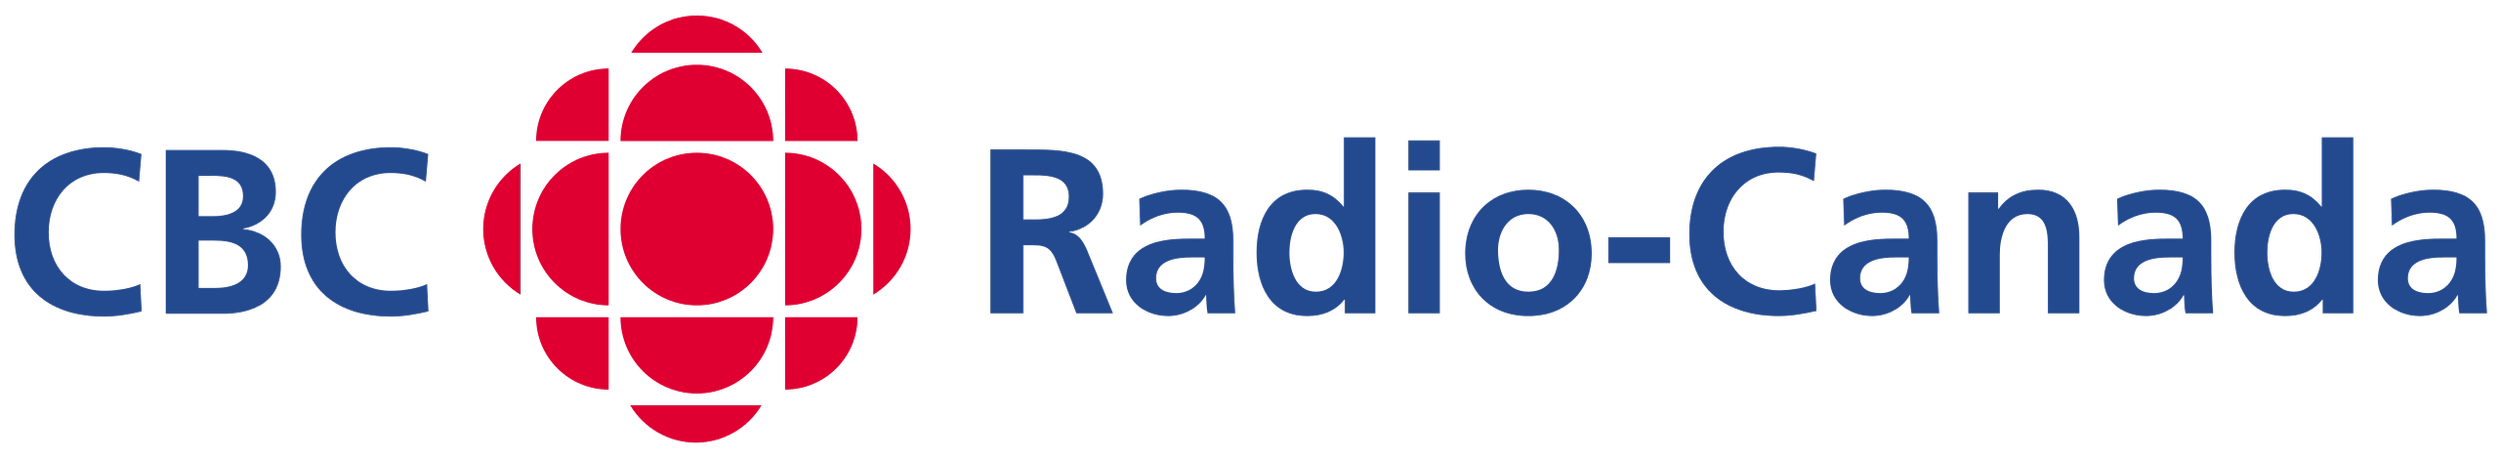 CBC_Radio-Canada_logo.png